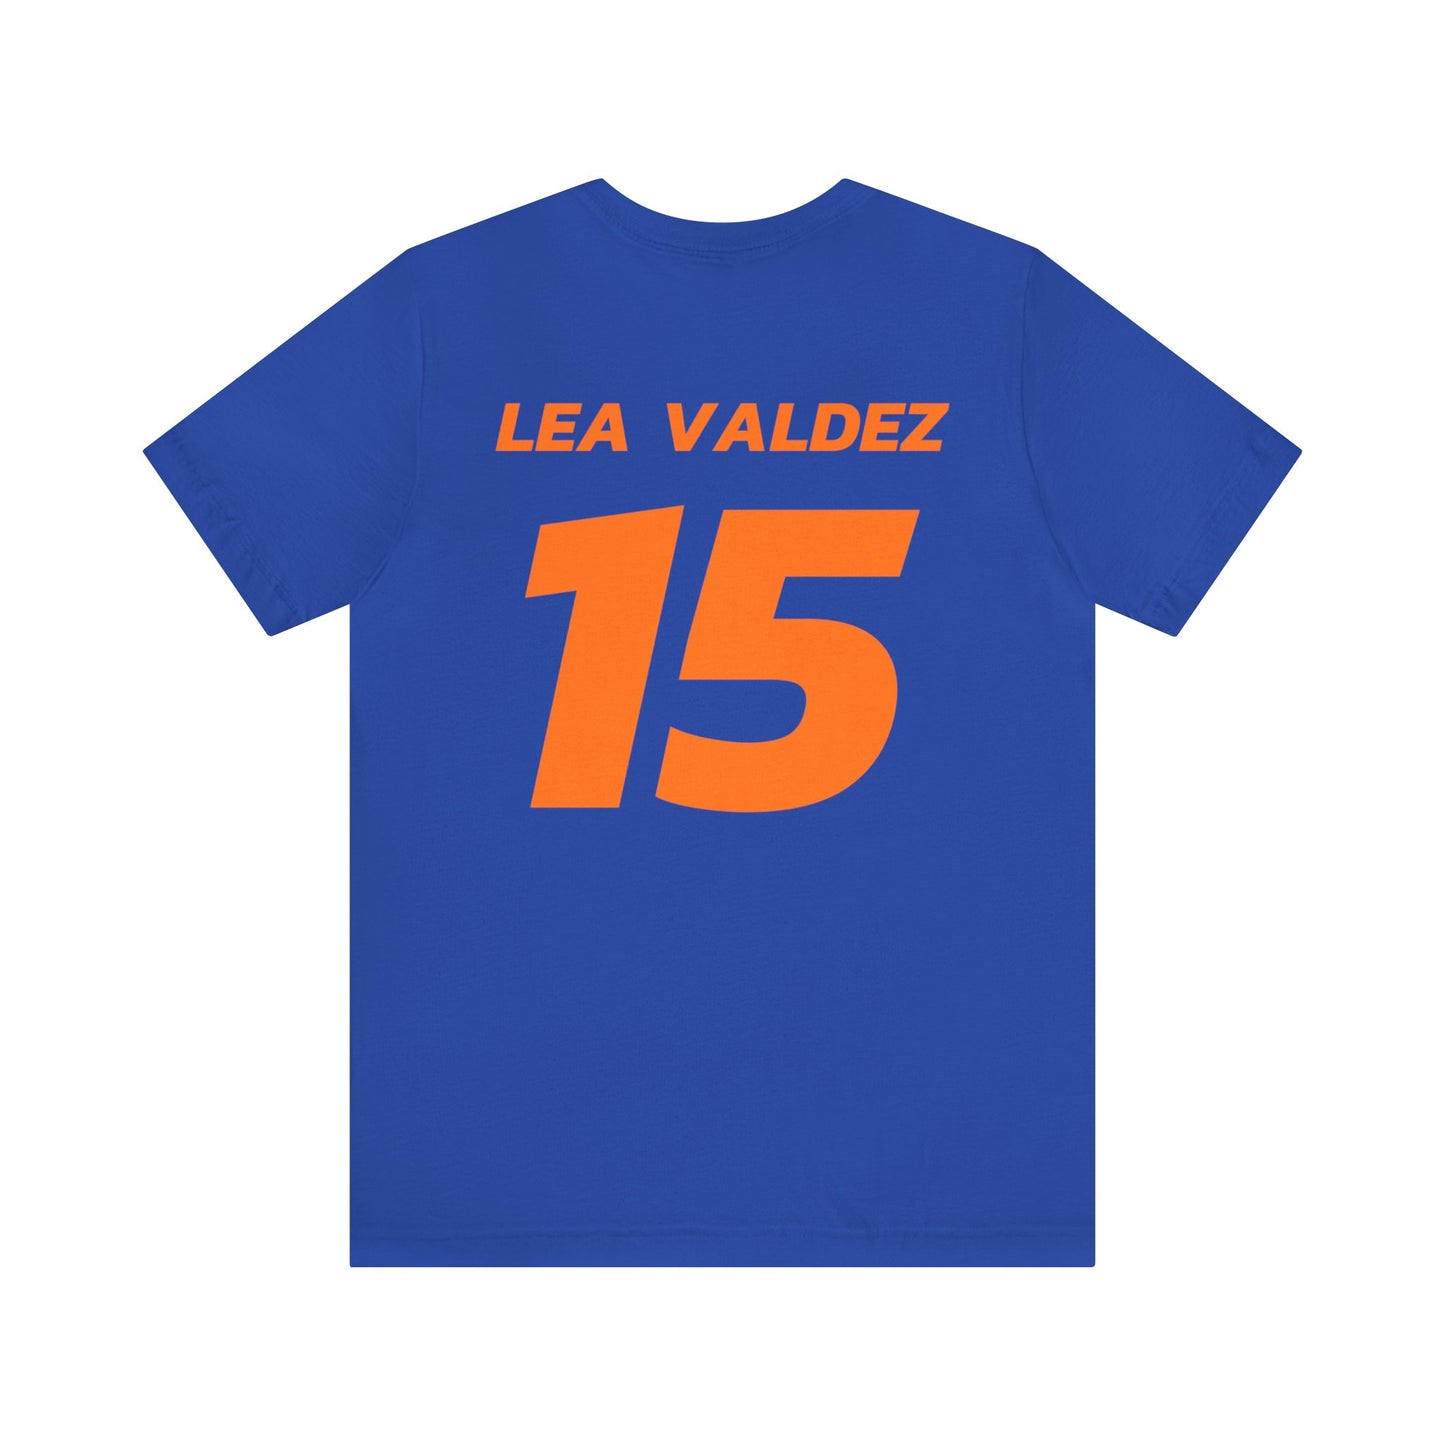 Lea Valdez: Essential Tee